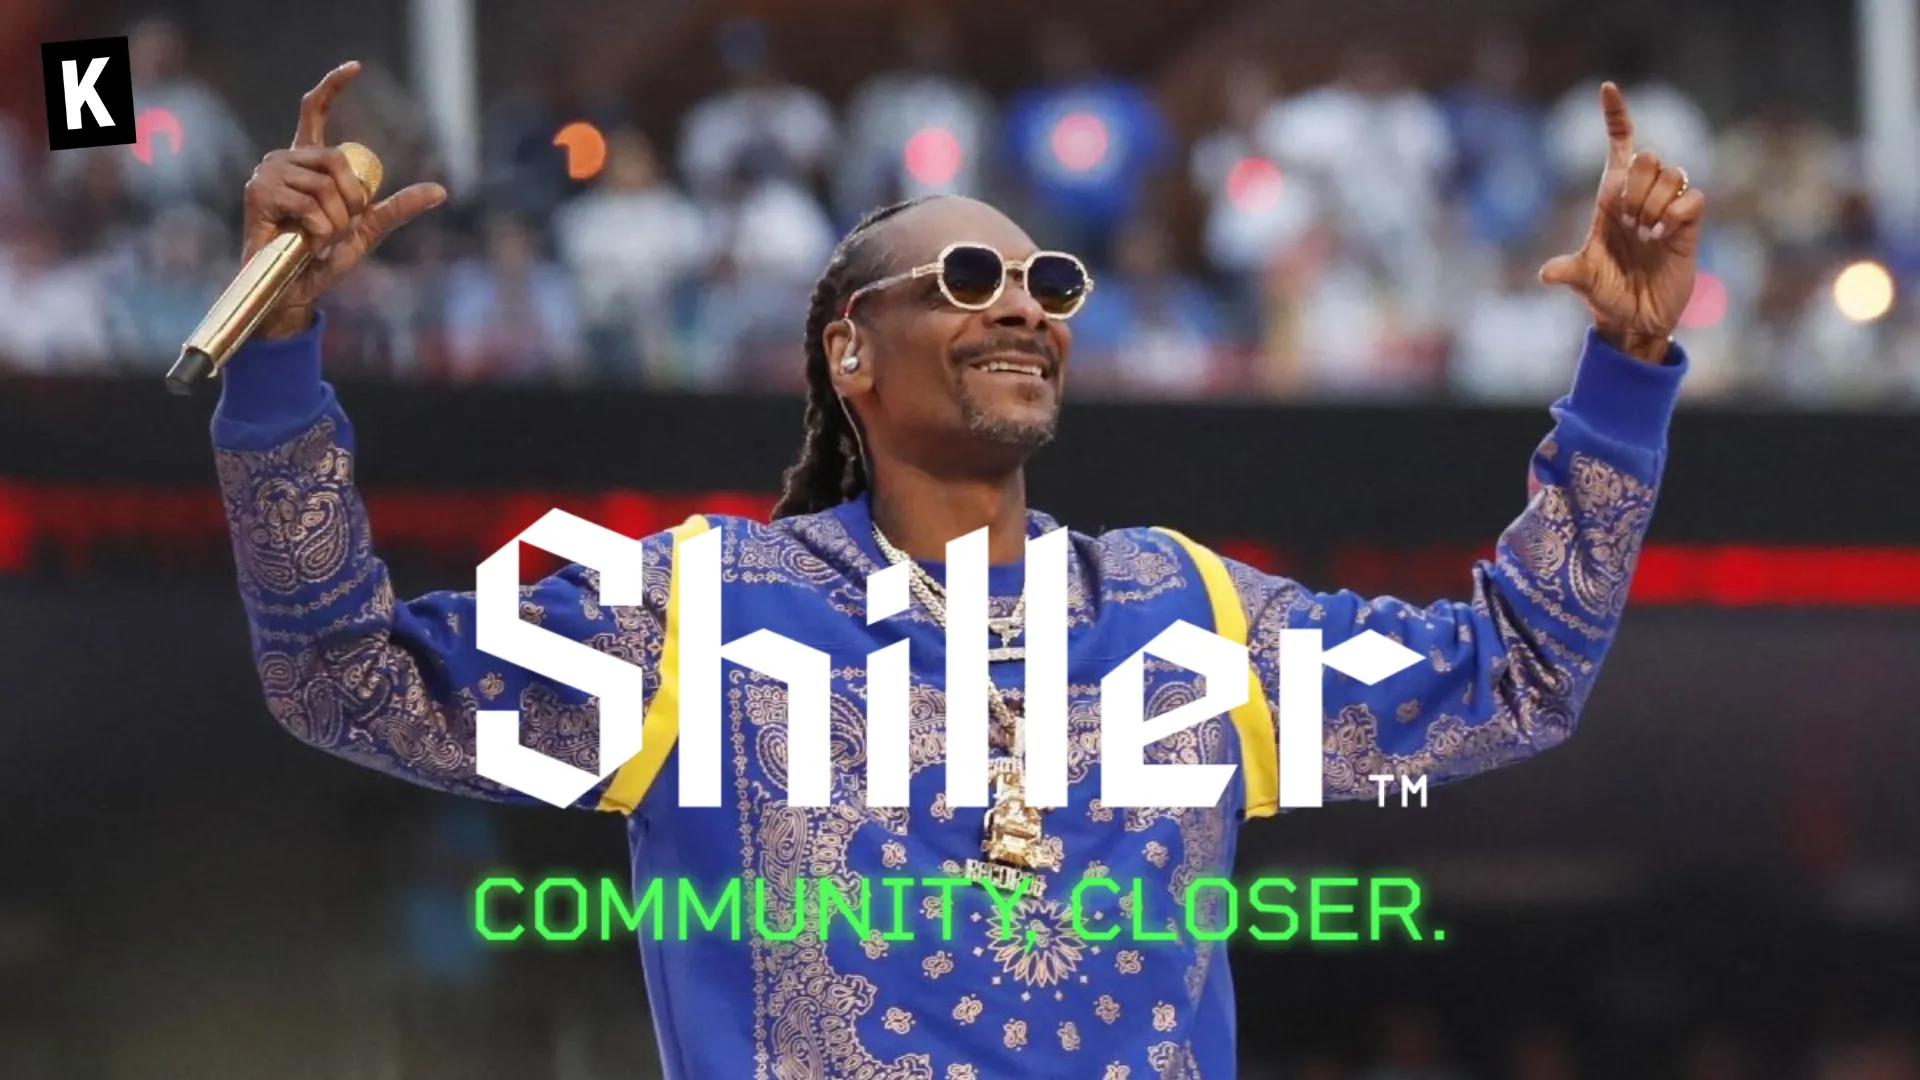 Snoop Dogg with the Shiller logo